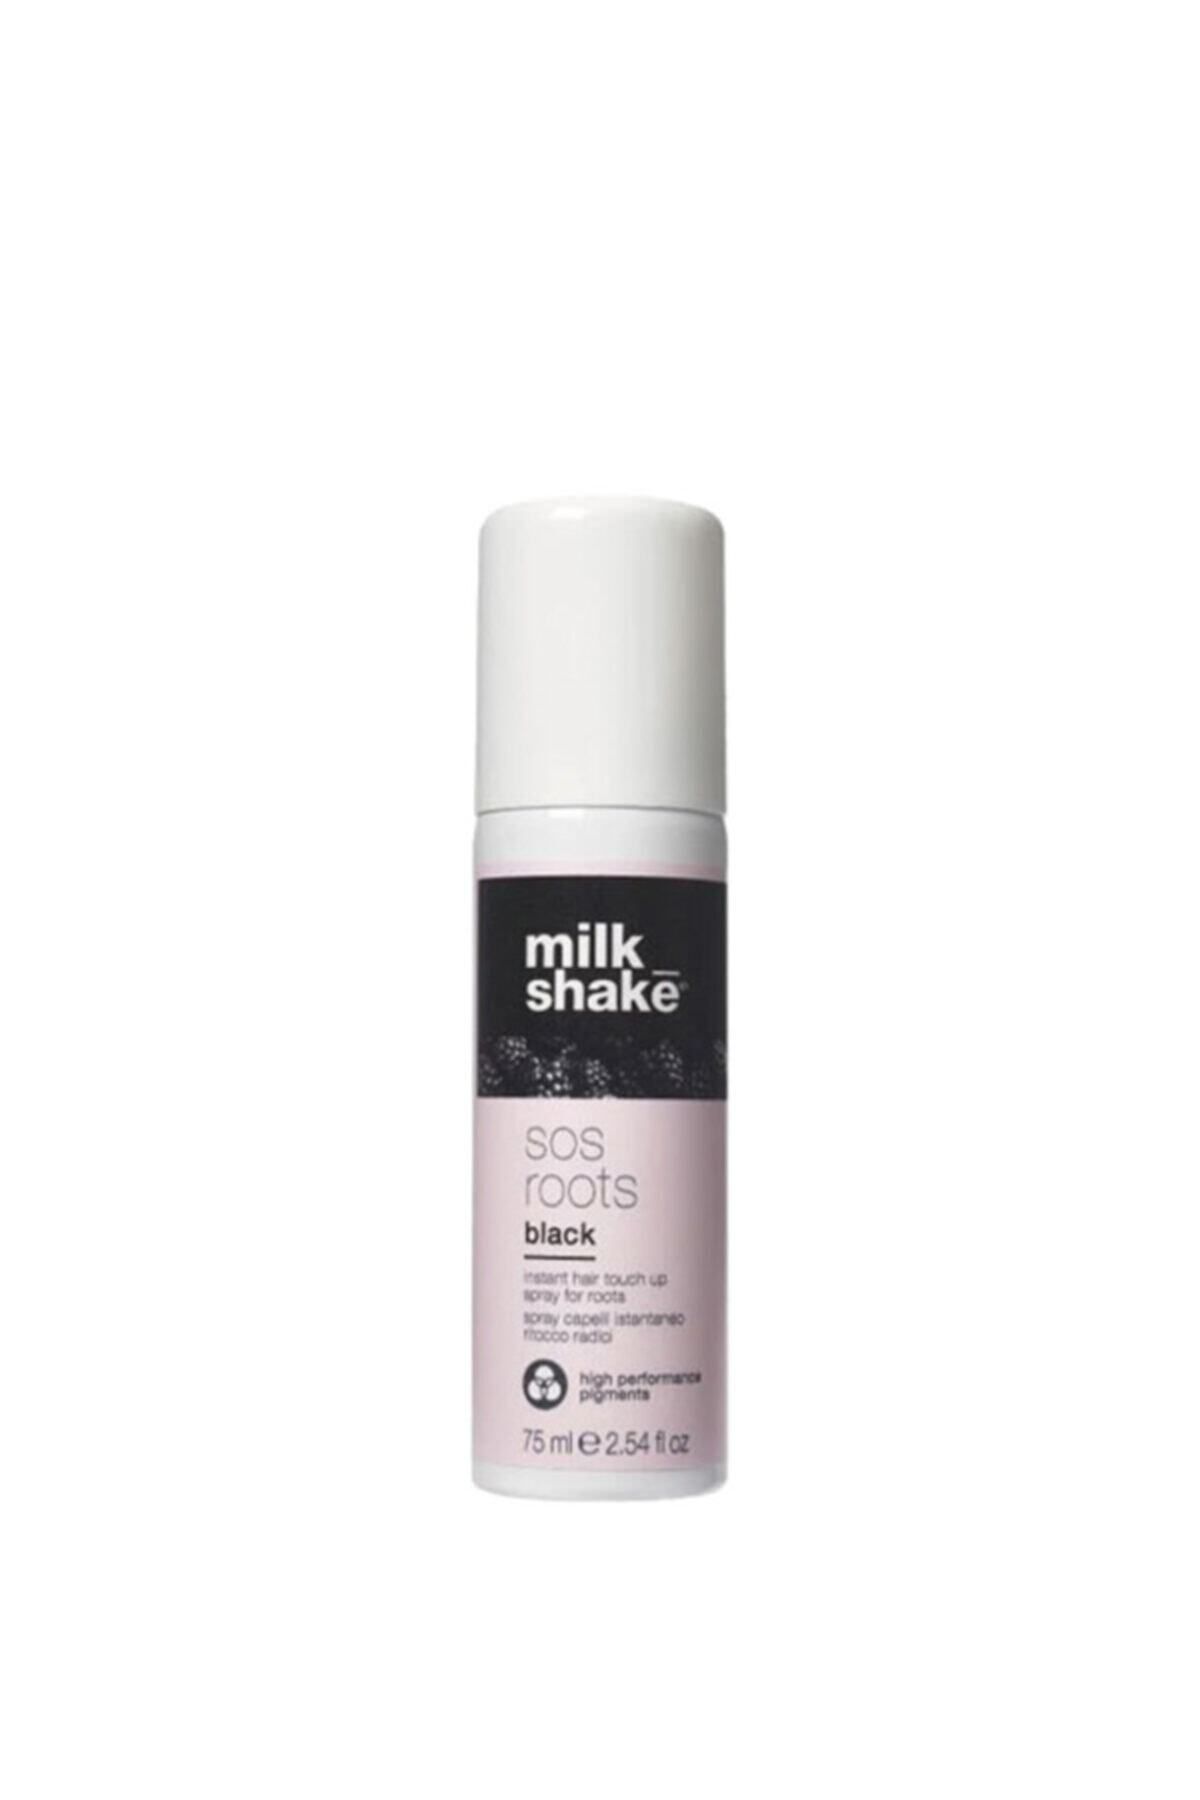 Milkshake Milk Shake Sost Roots Black 75ml